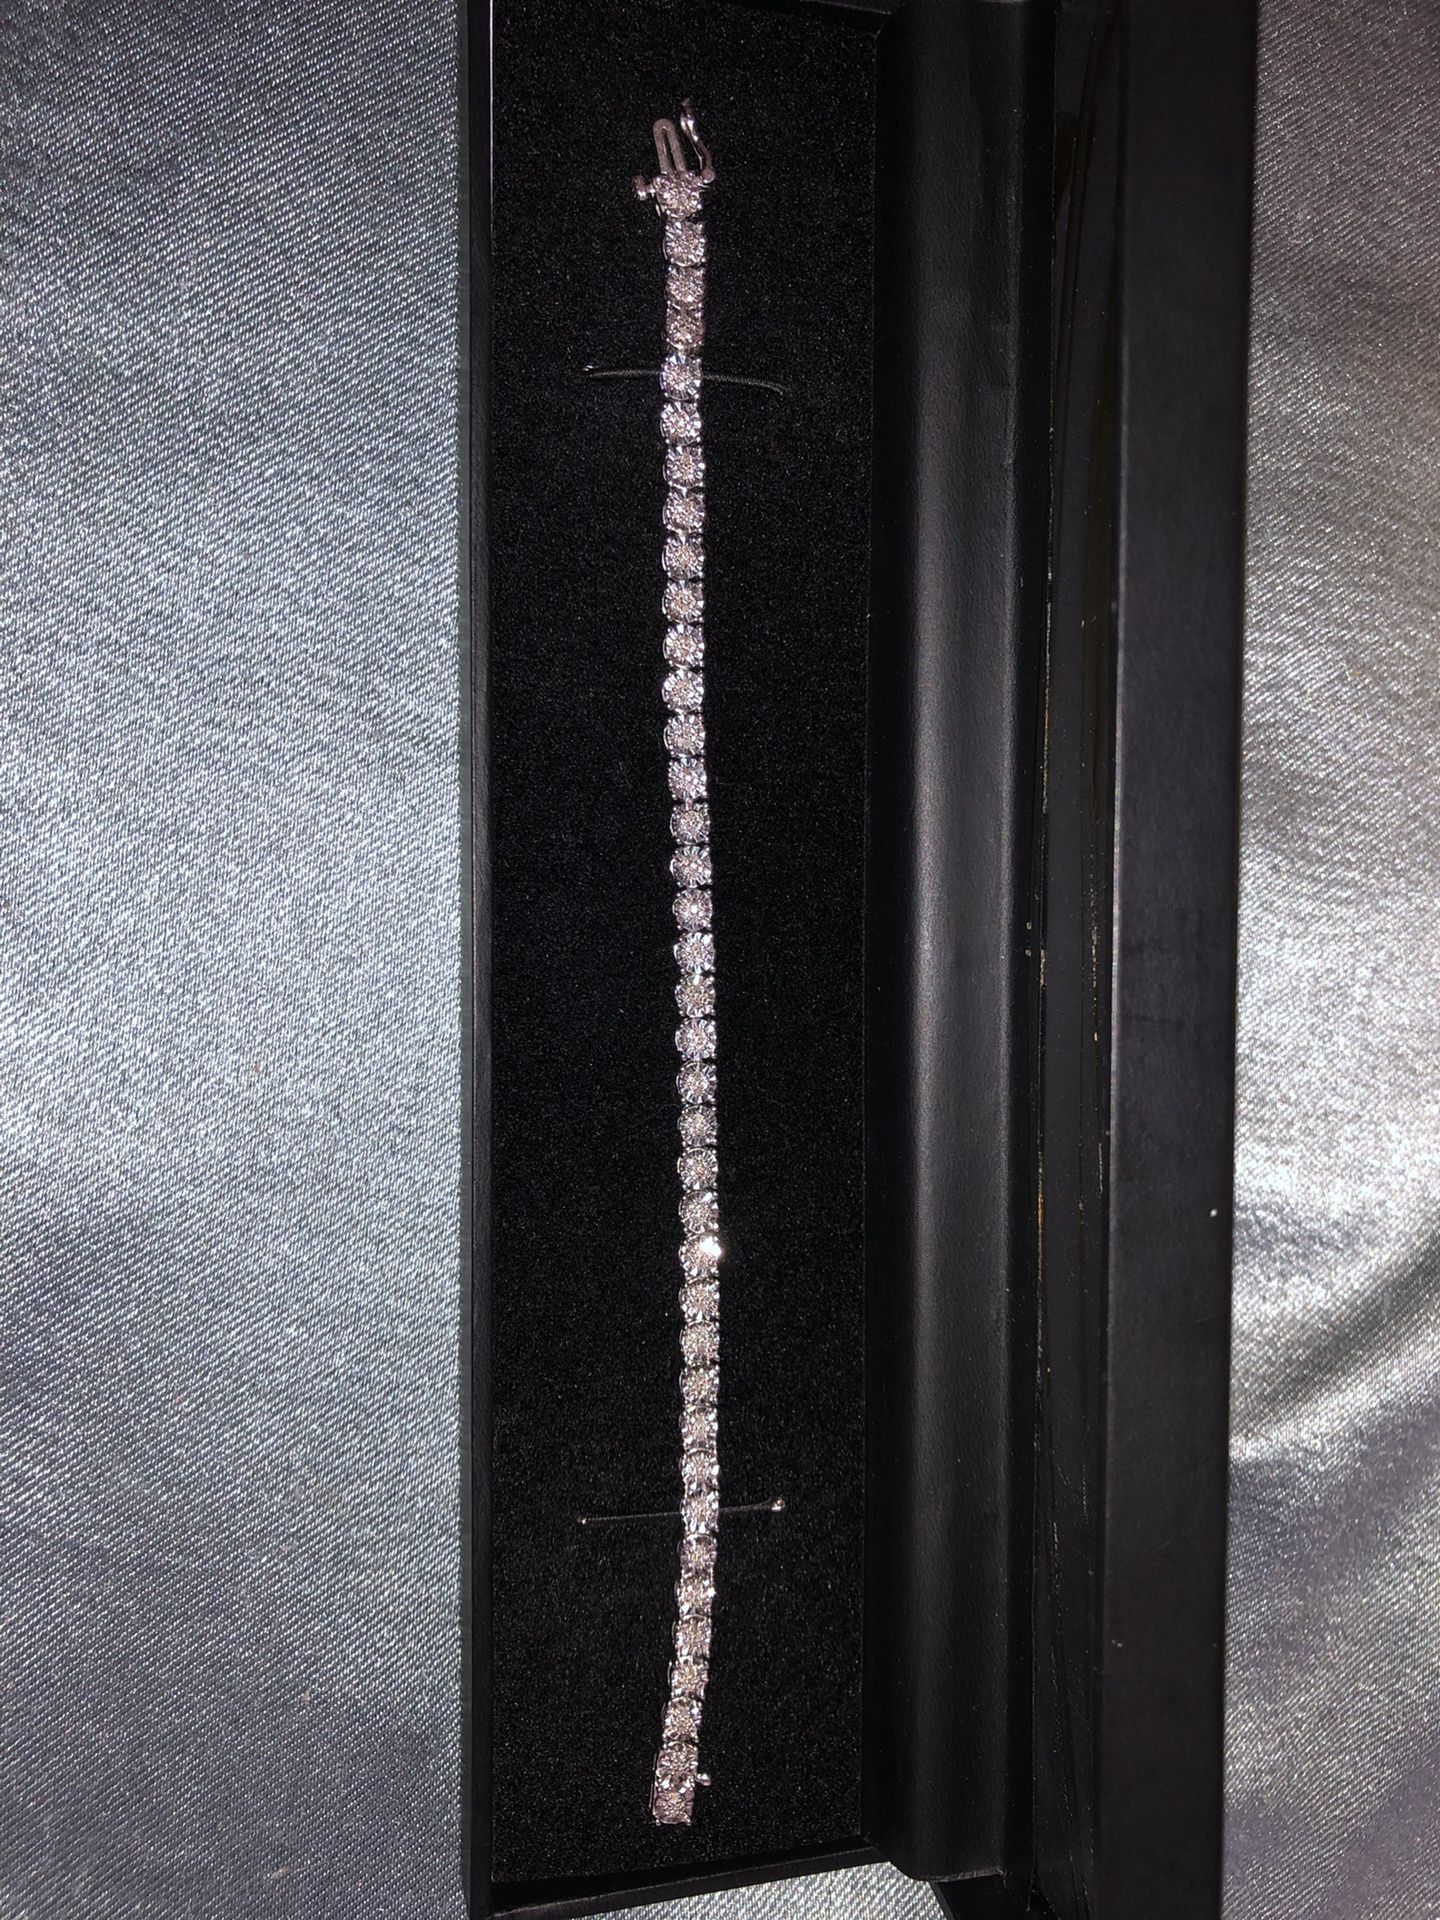 Silver bracelet with diamond / diamond cut charms